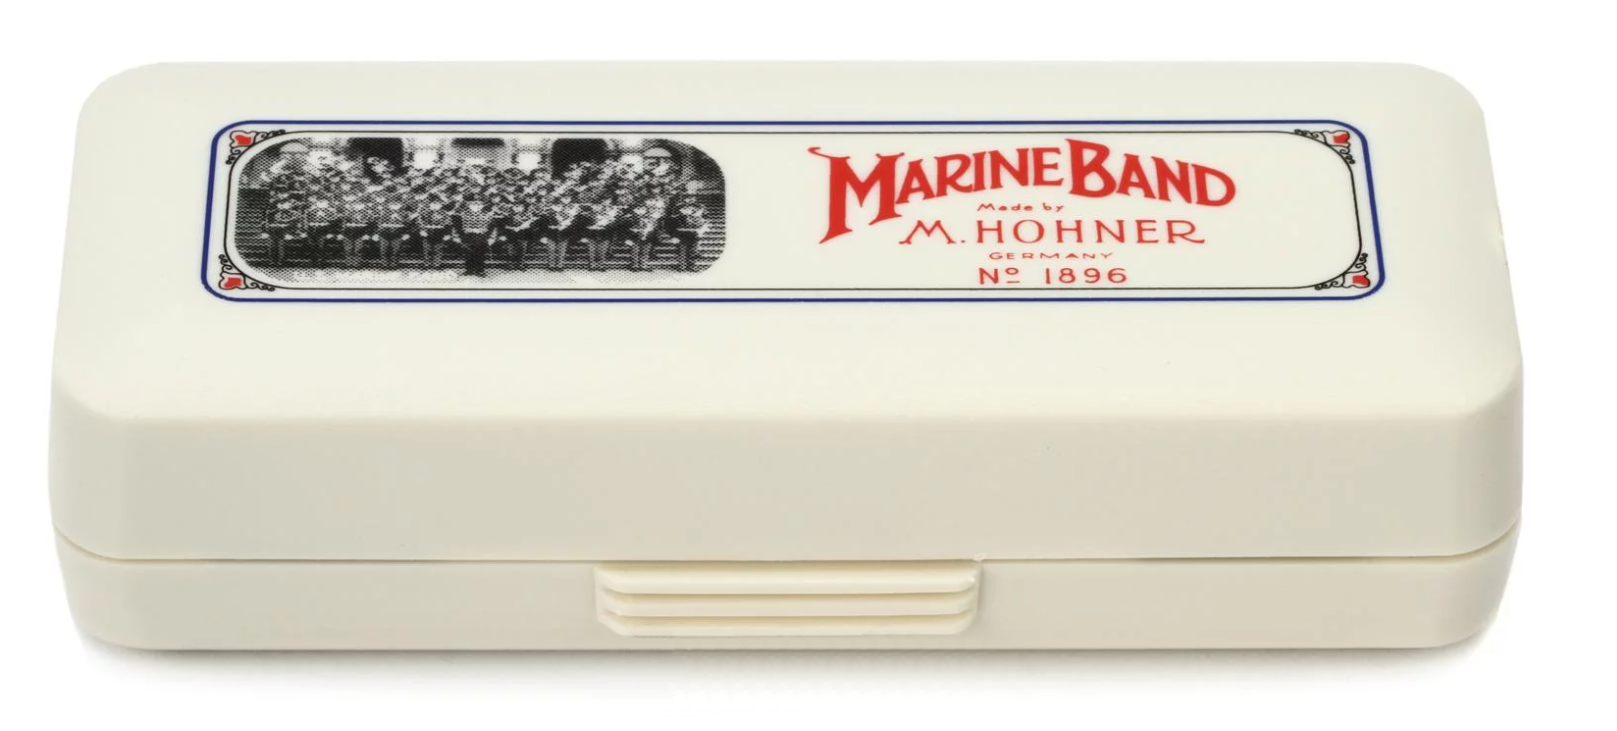 HOHNER  Diatonic Harmonica, Marine Band 1896 - Key of  C#Db